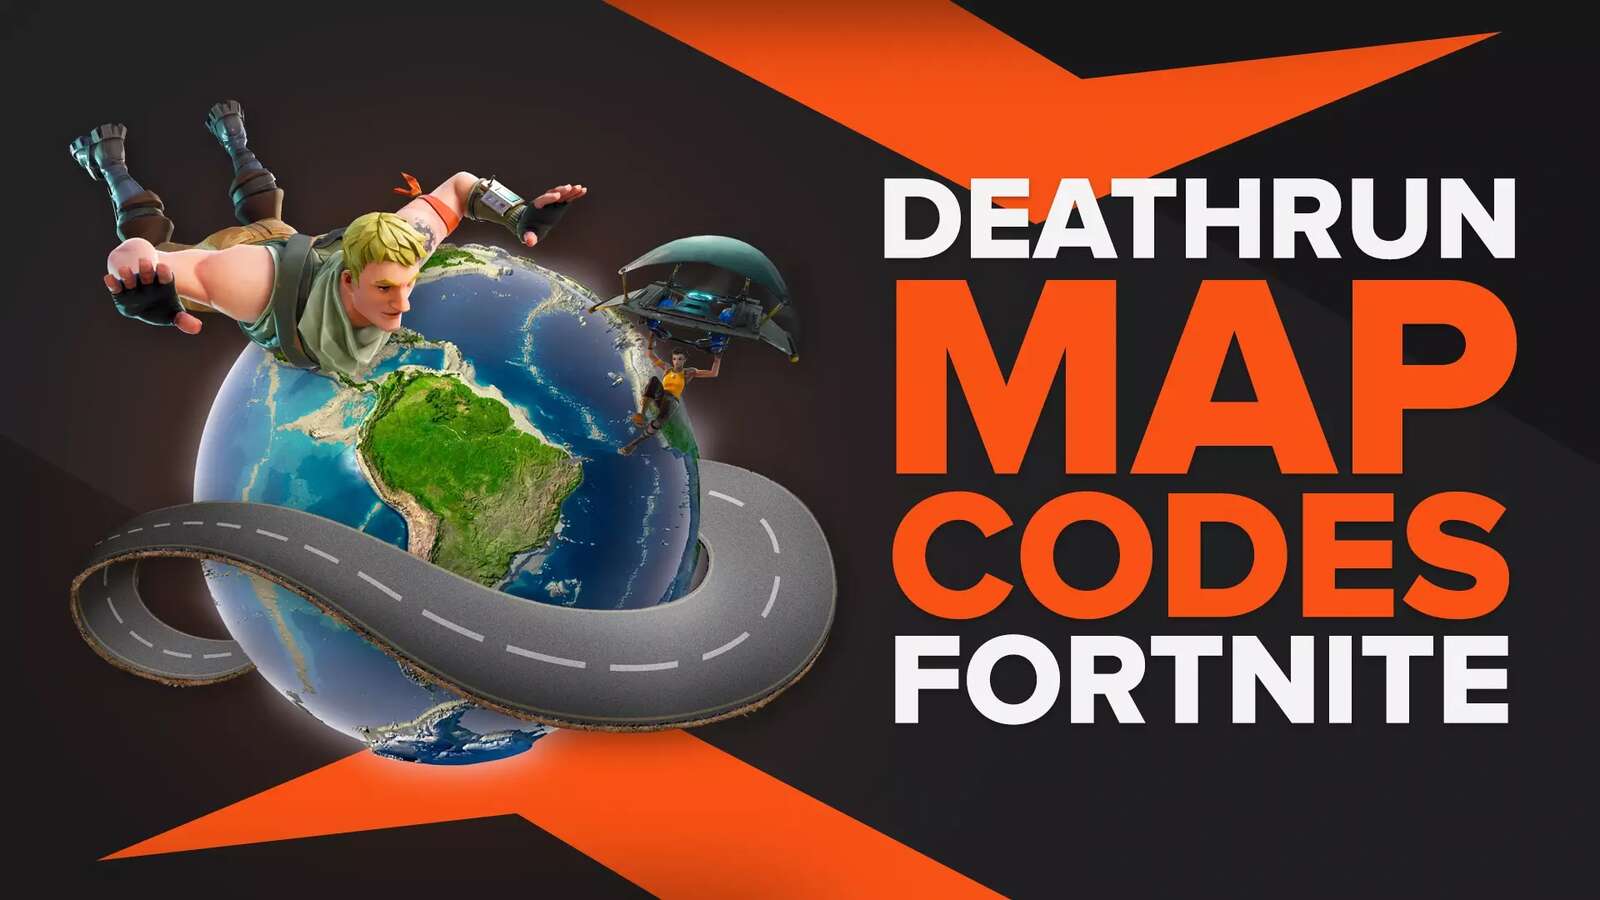 8 Best Fortnite Deathrun Codes to Test Your Skills